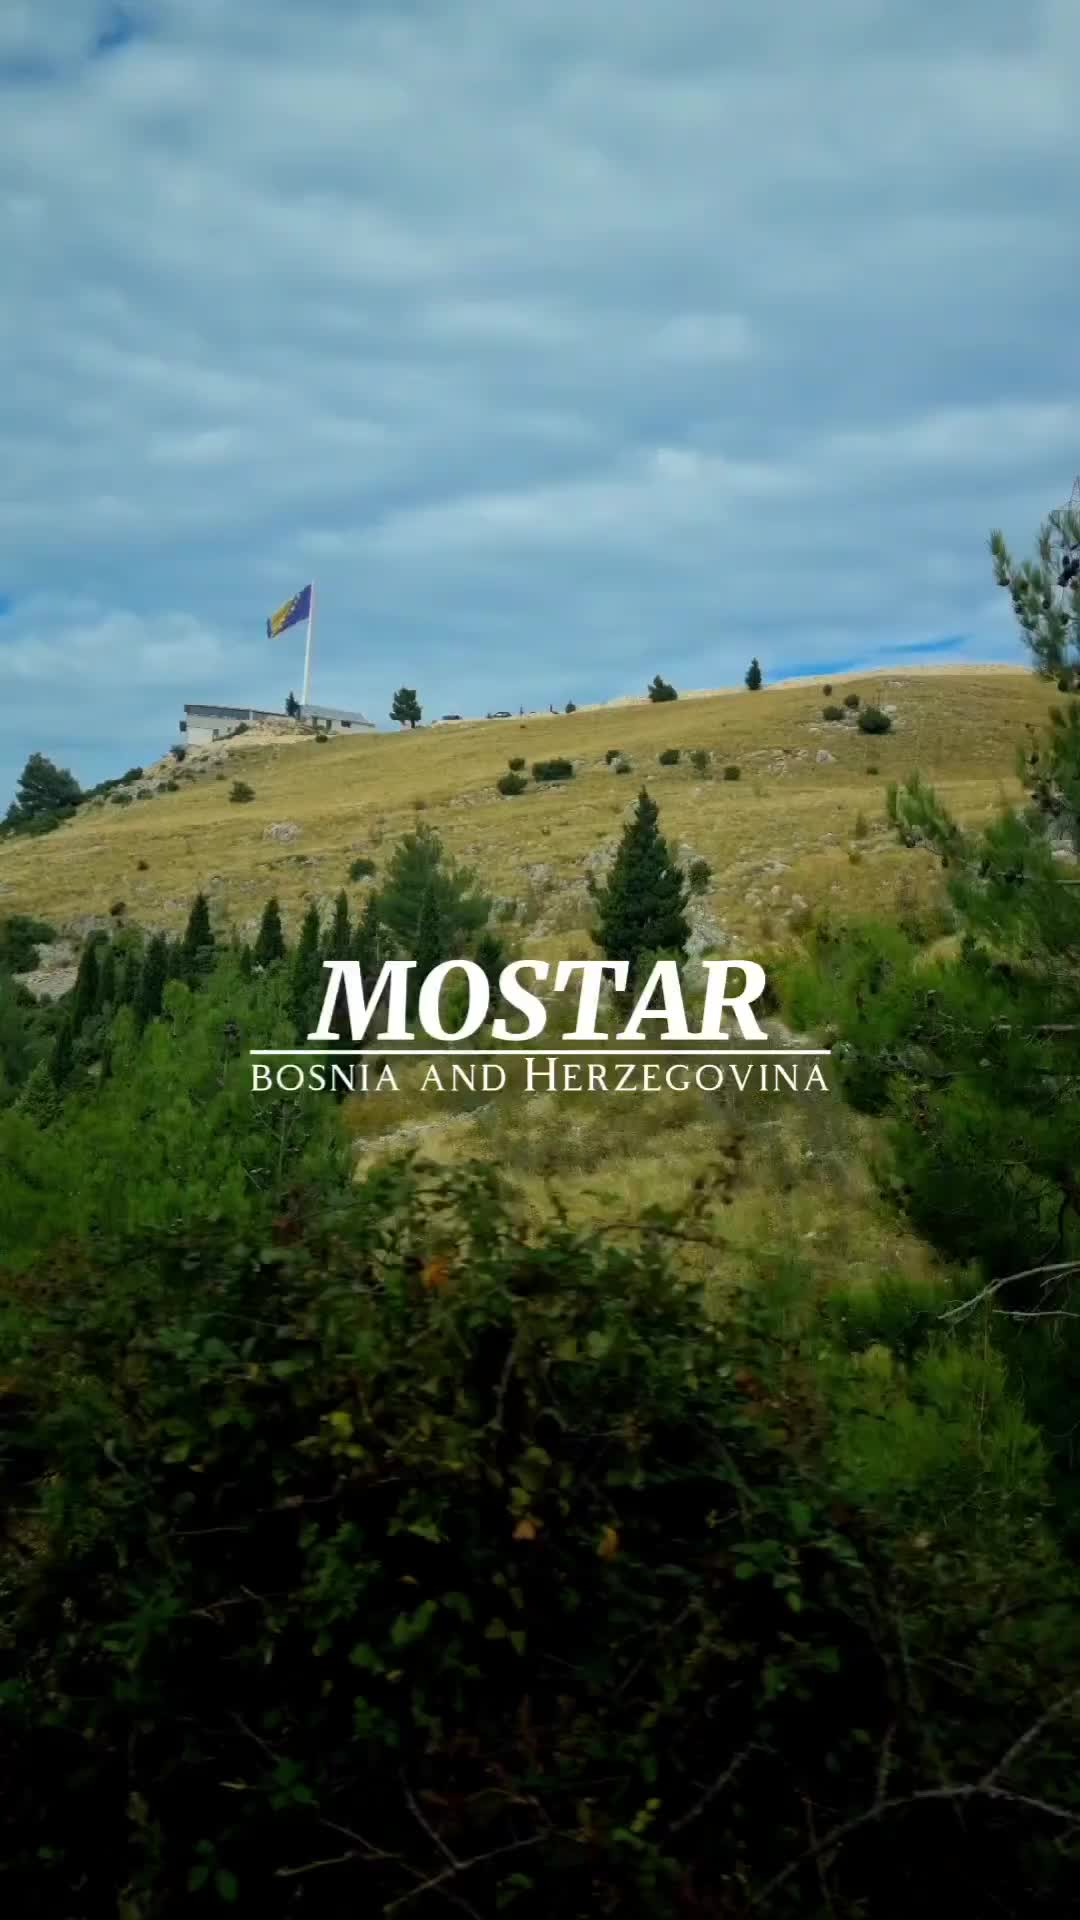 Discover the Beauty of Mostar, Bosnia & Herzegovina